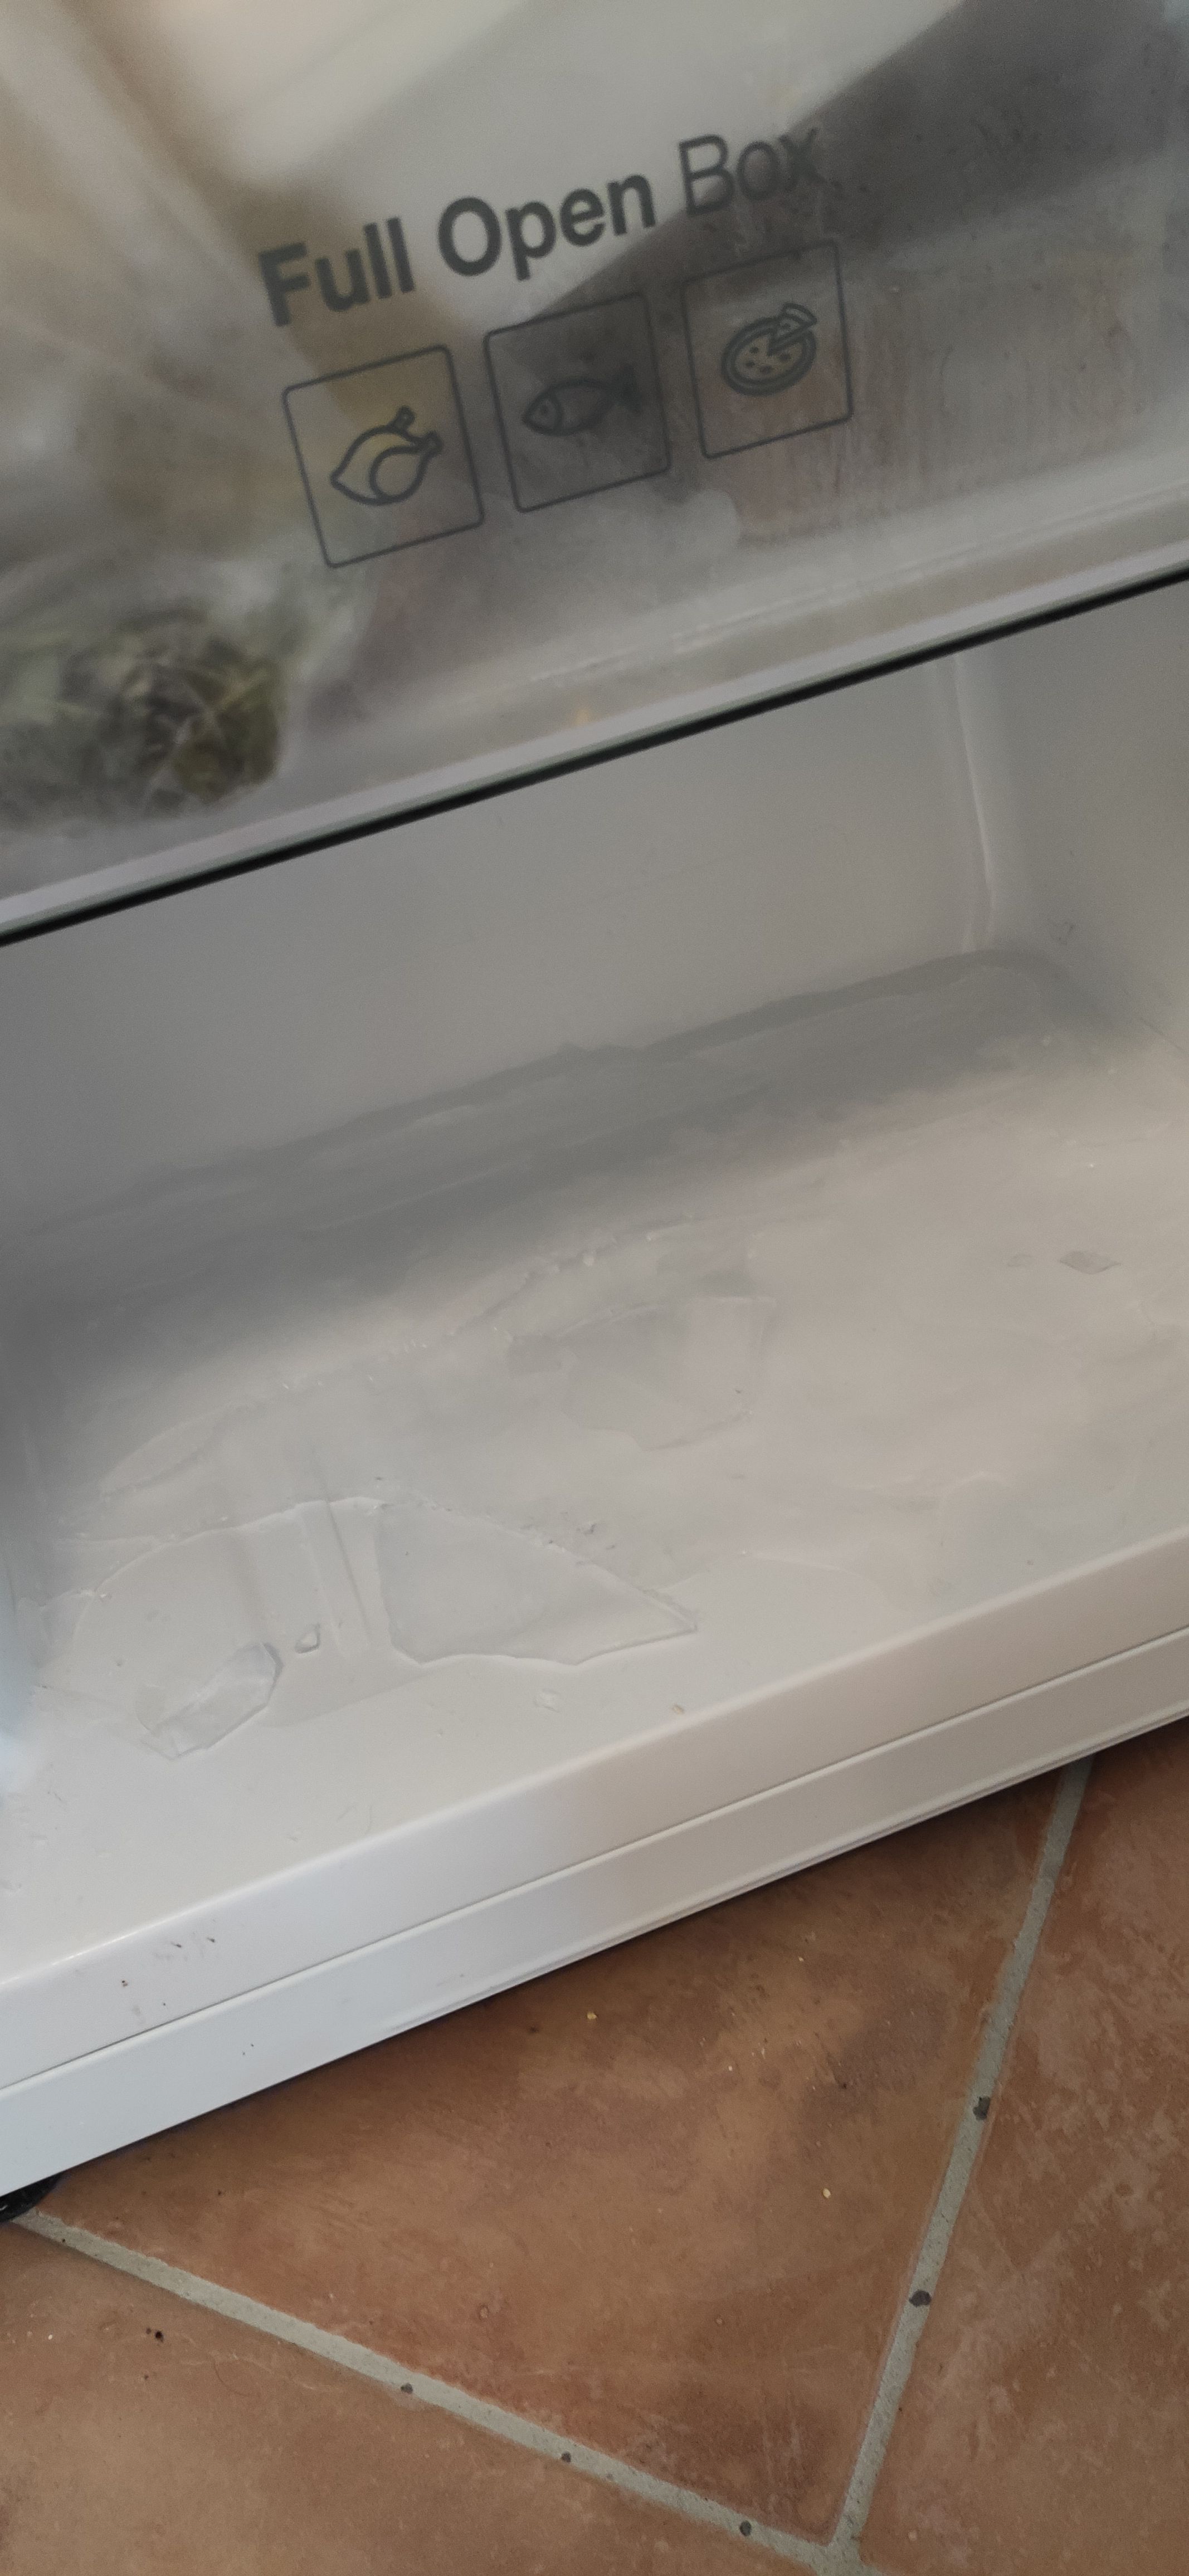 Frig no frost RL52VEBIH ghiaccio nel freezer - Pagina 10 - Samsung Community